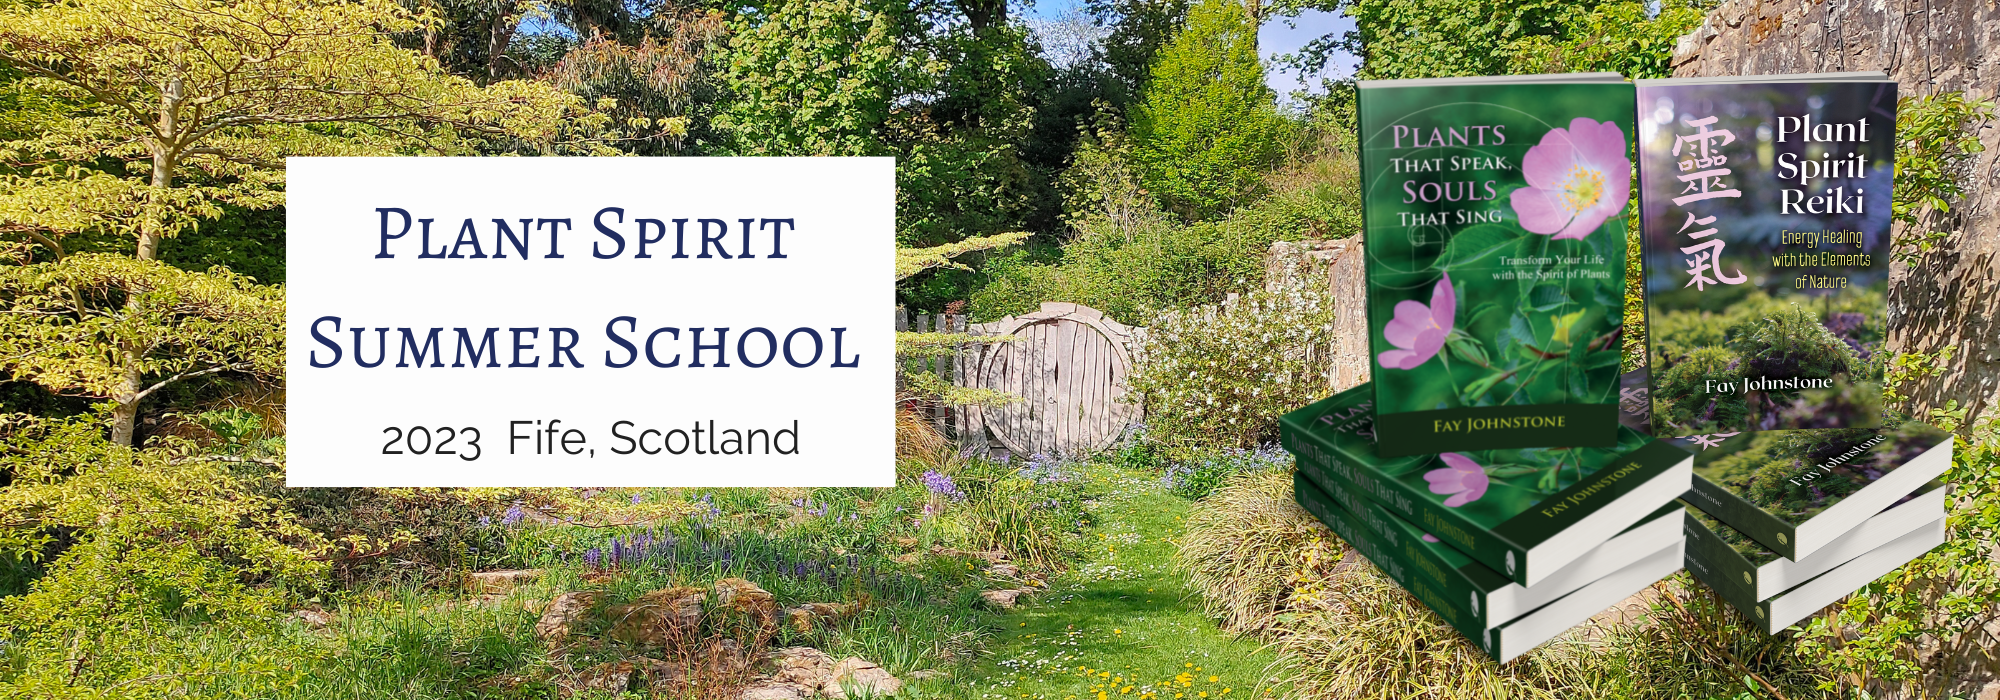 Plant Spirit Summer School 2023